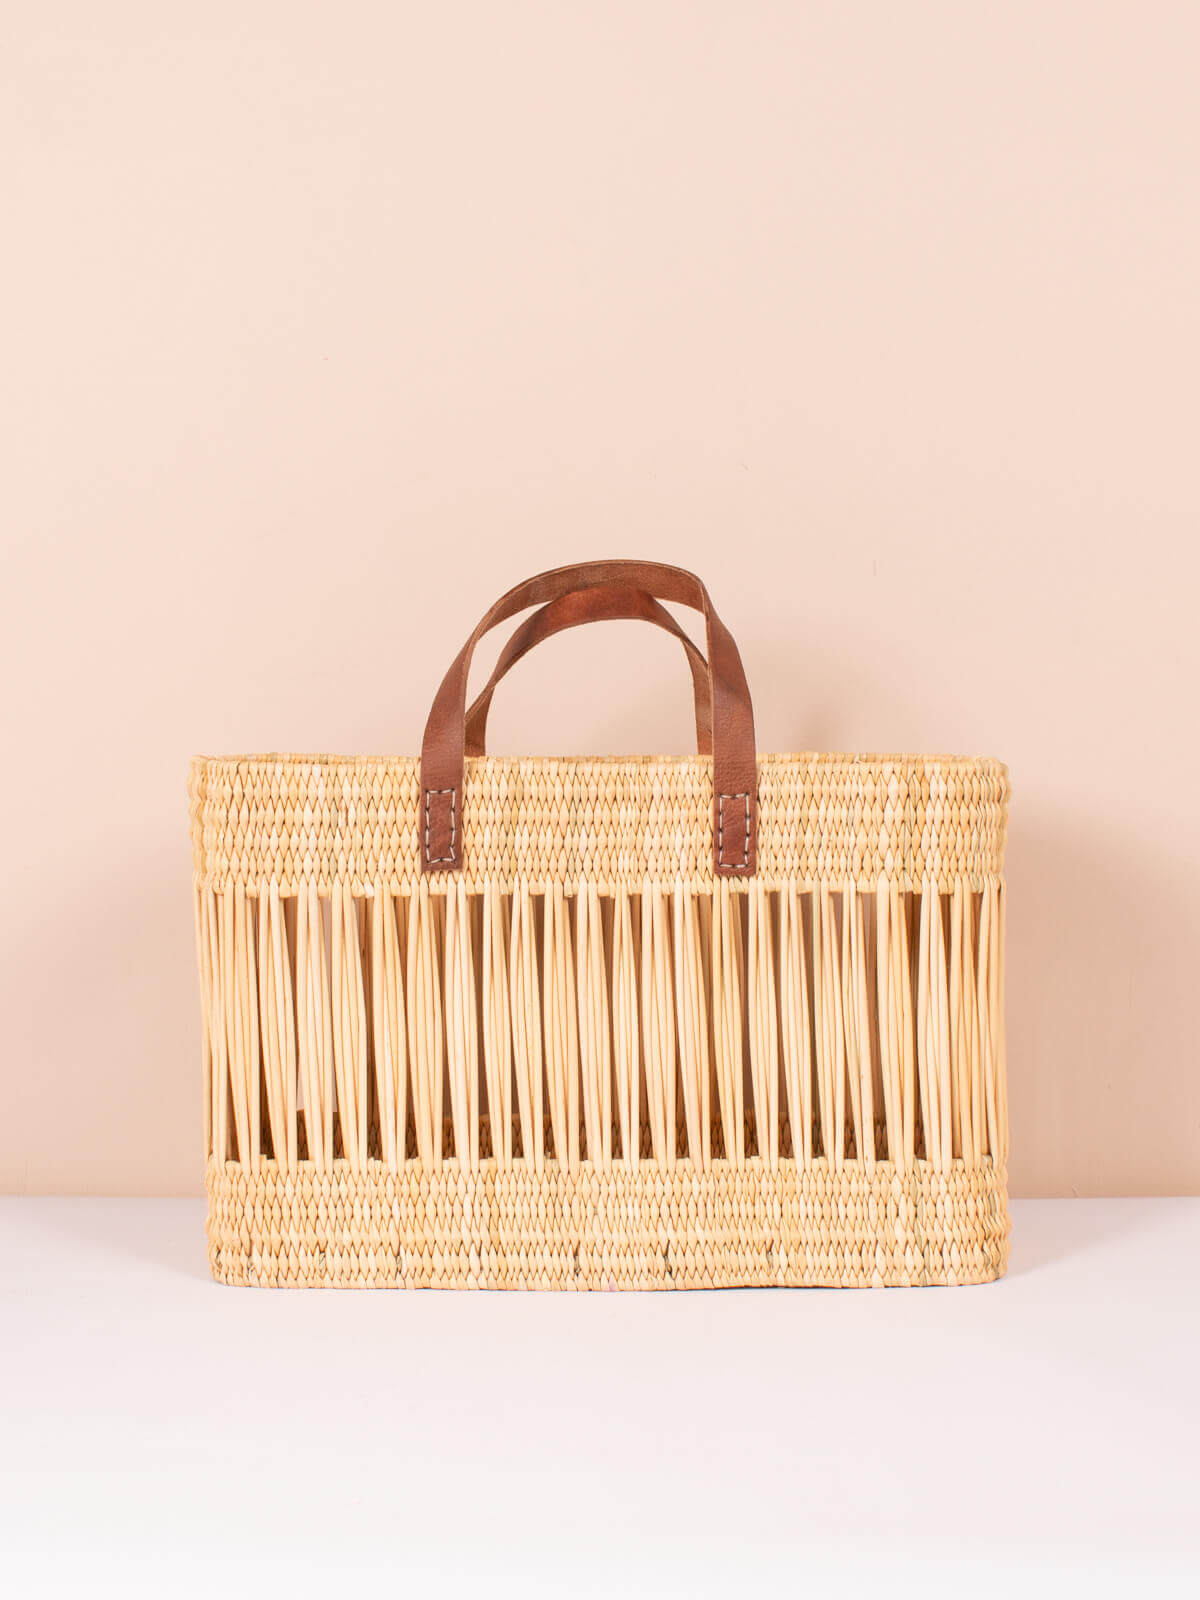 Decorative Reed Basket